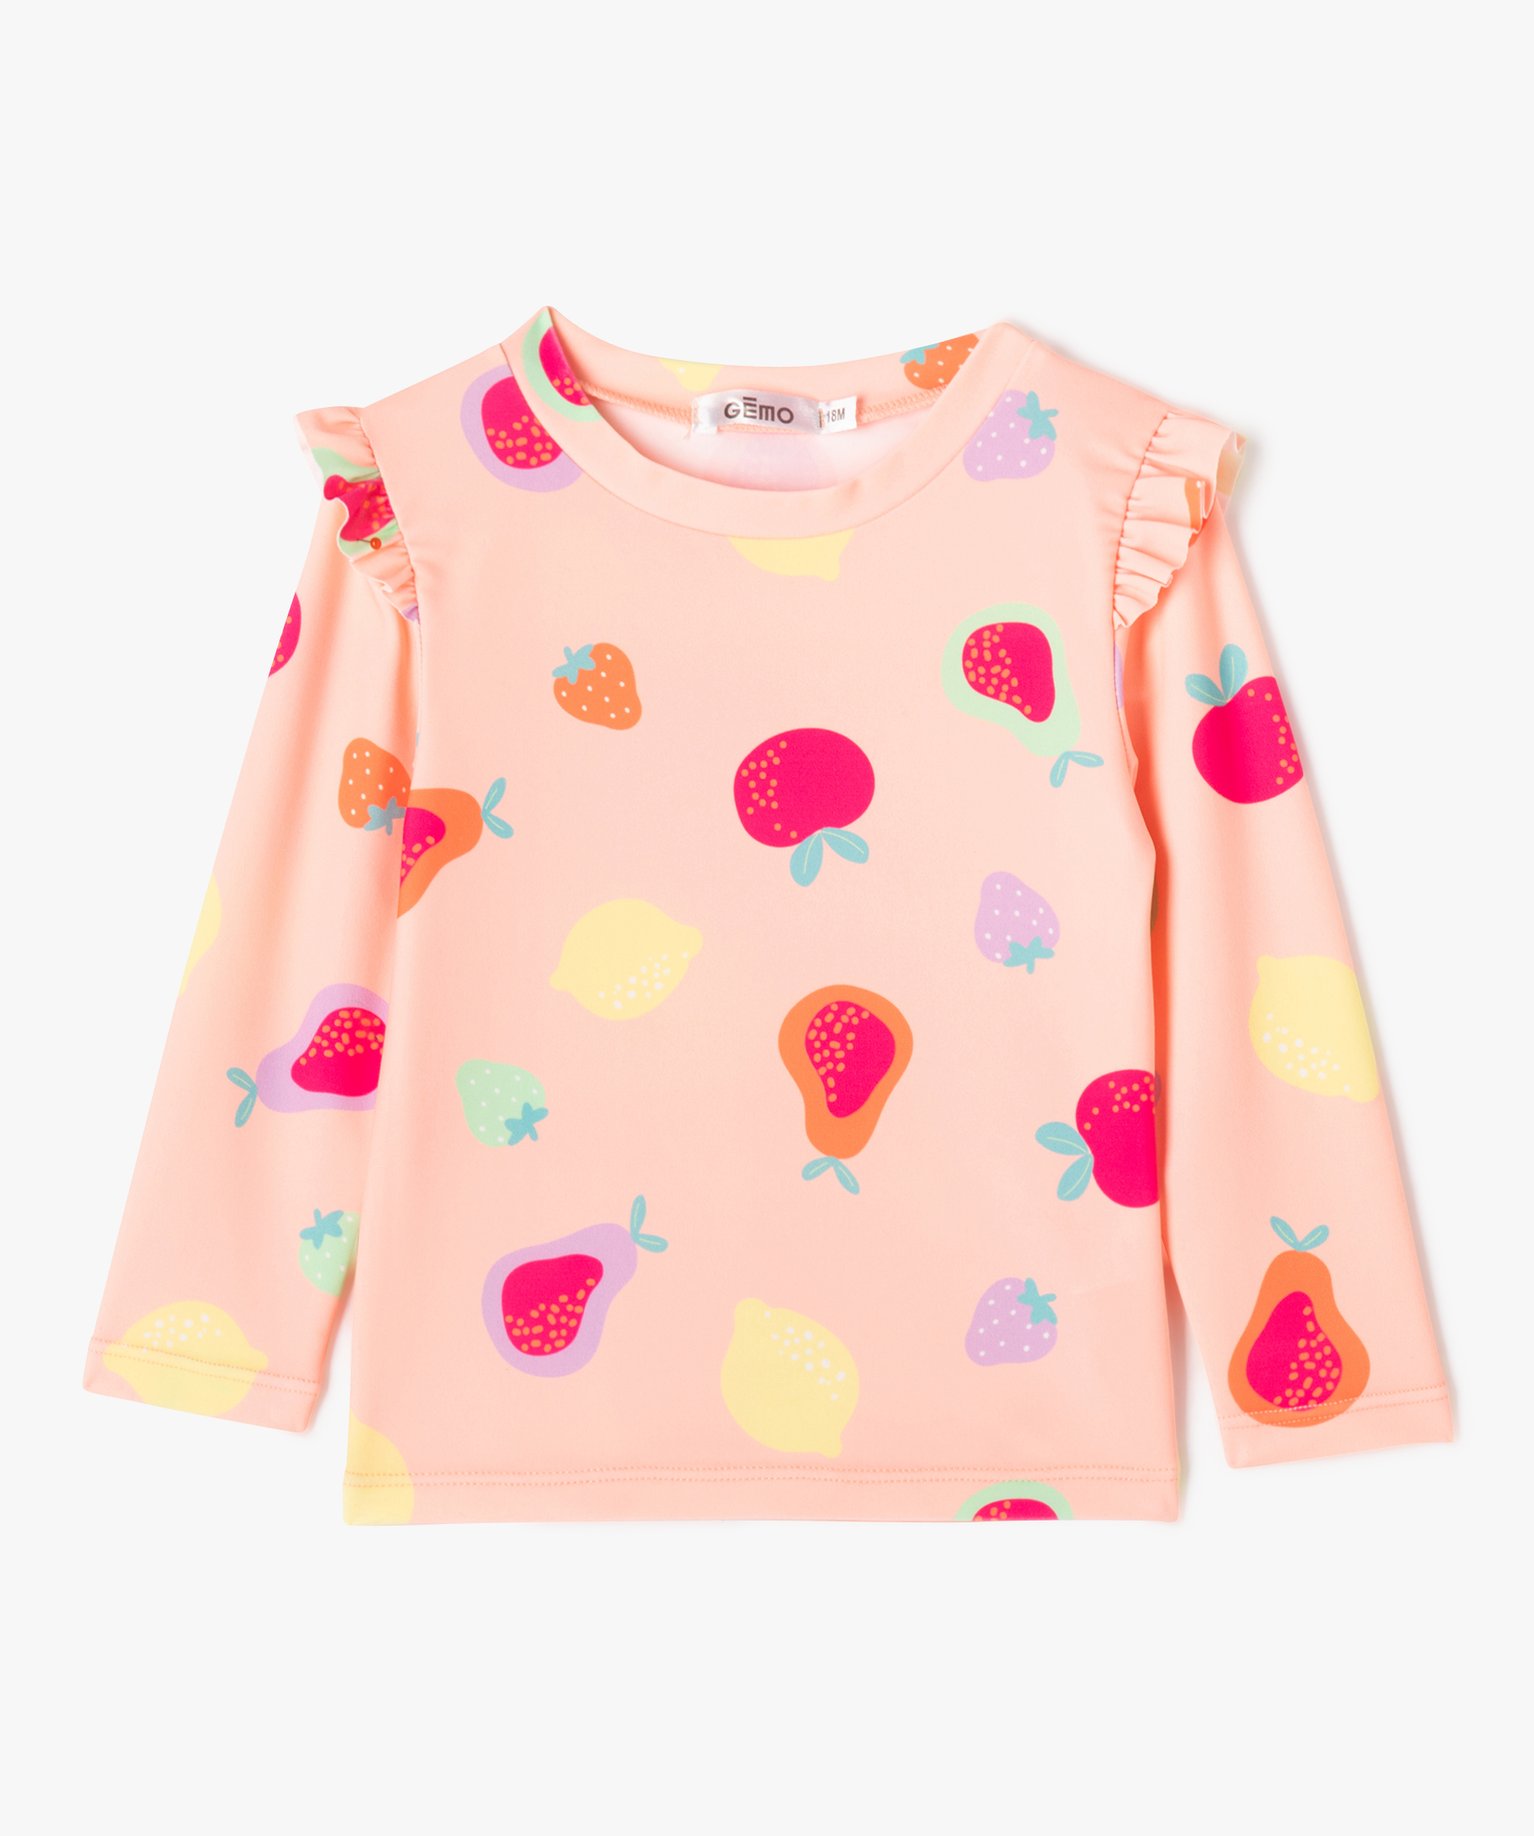 Tee-shirt de bain anti UV à motifs fruits bébé fille - 12M - rose - GEMO